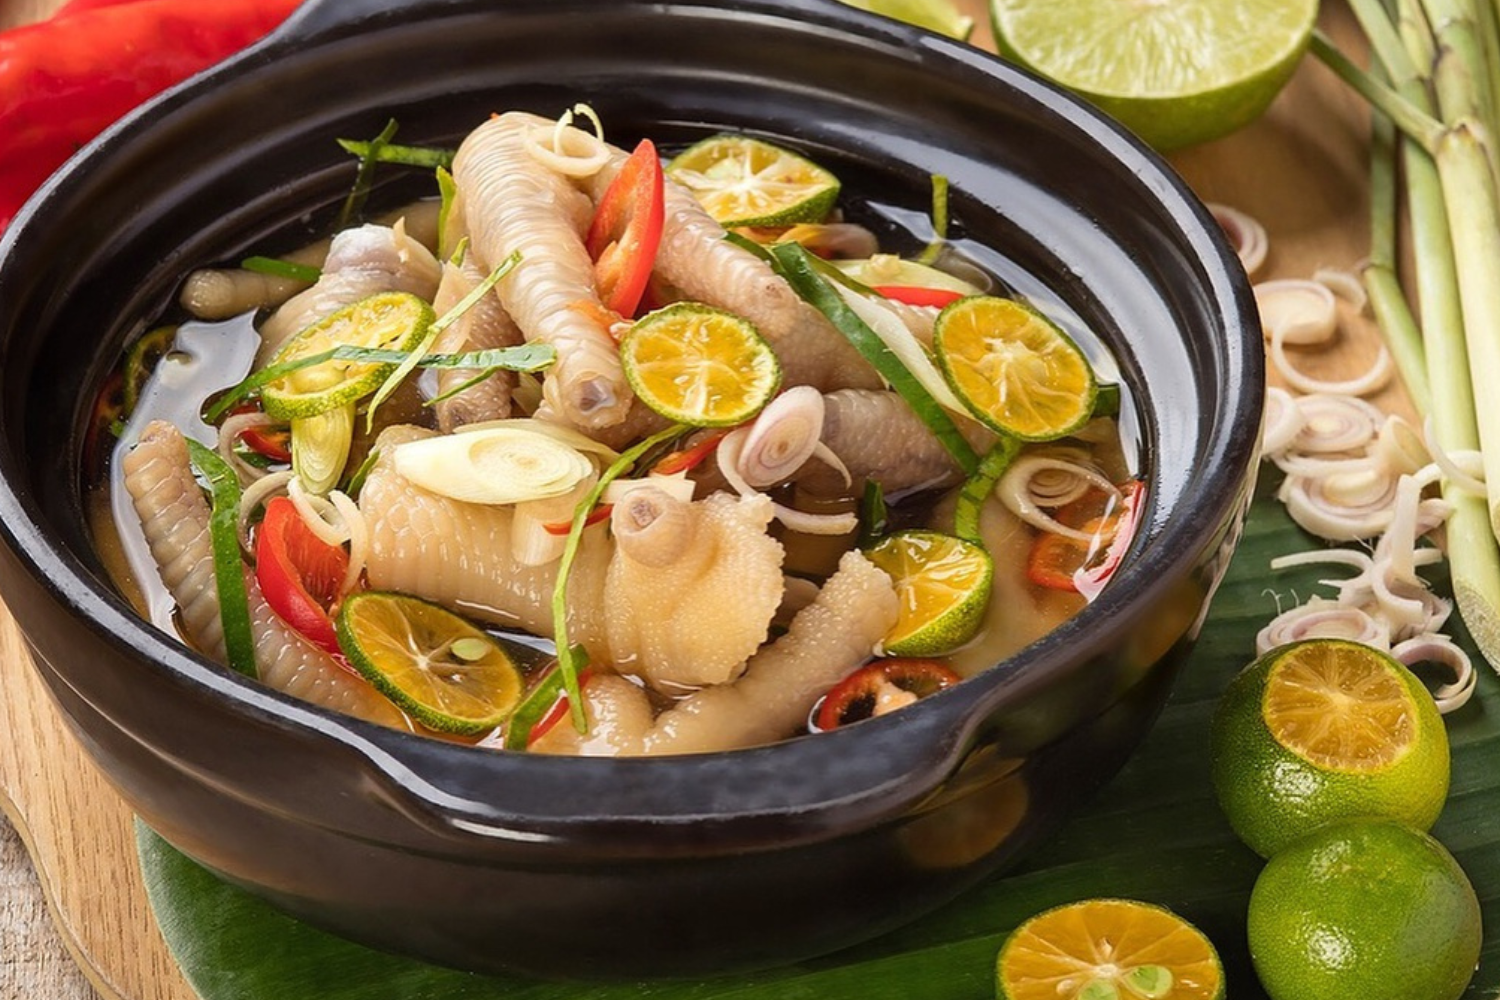 Top 10 unusual foods to try in Vietnam: Chan Ga (Chicken feet)